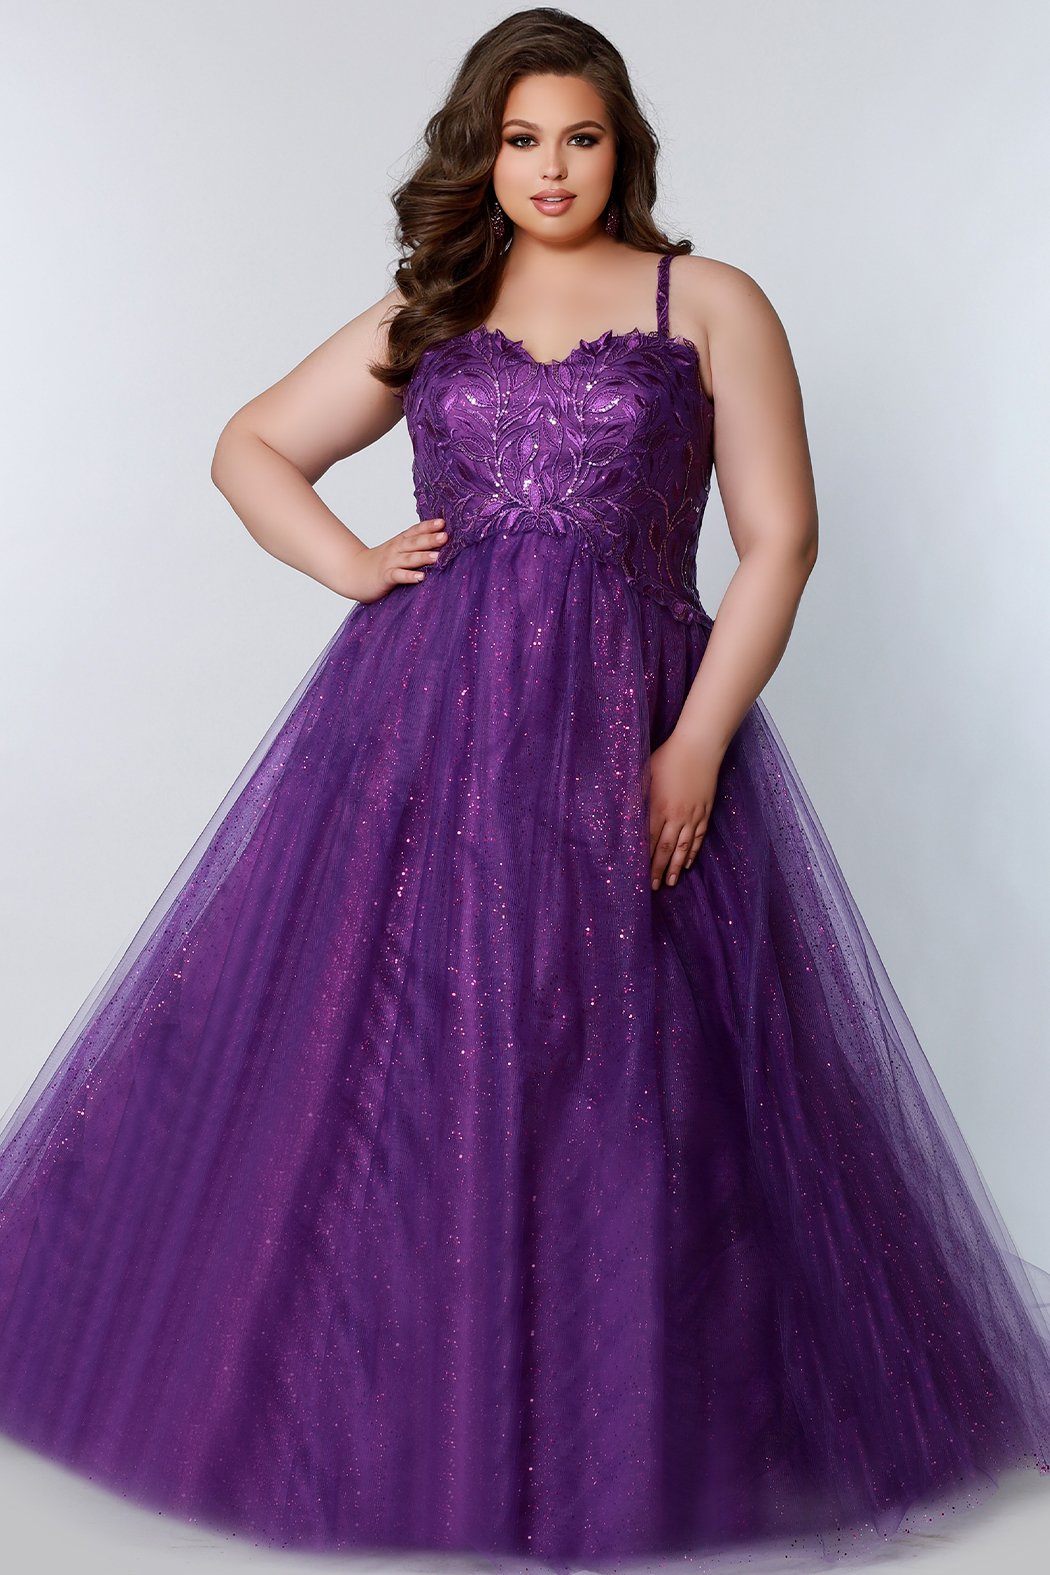 Plus Size Hollywood Lace Empire-Waist Prom Dress – Sydney's Closet